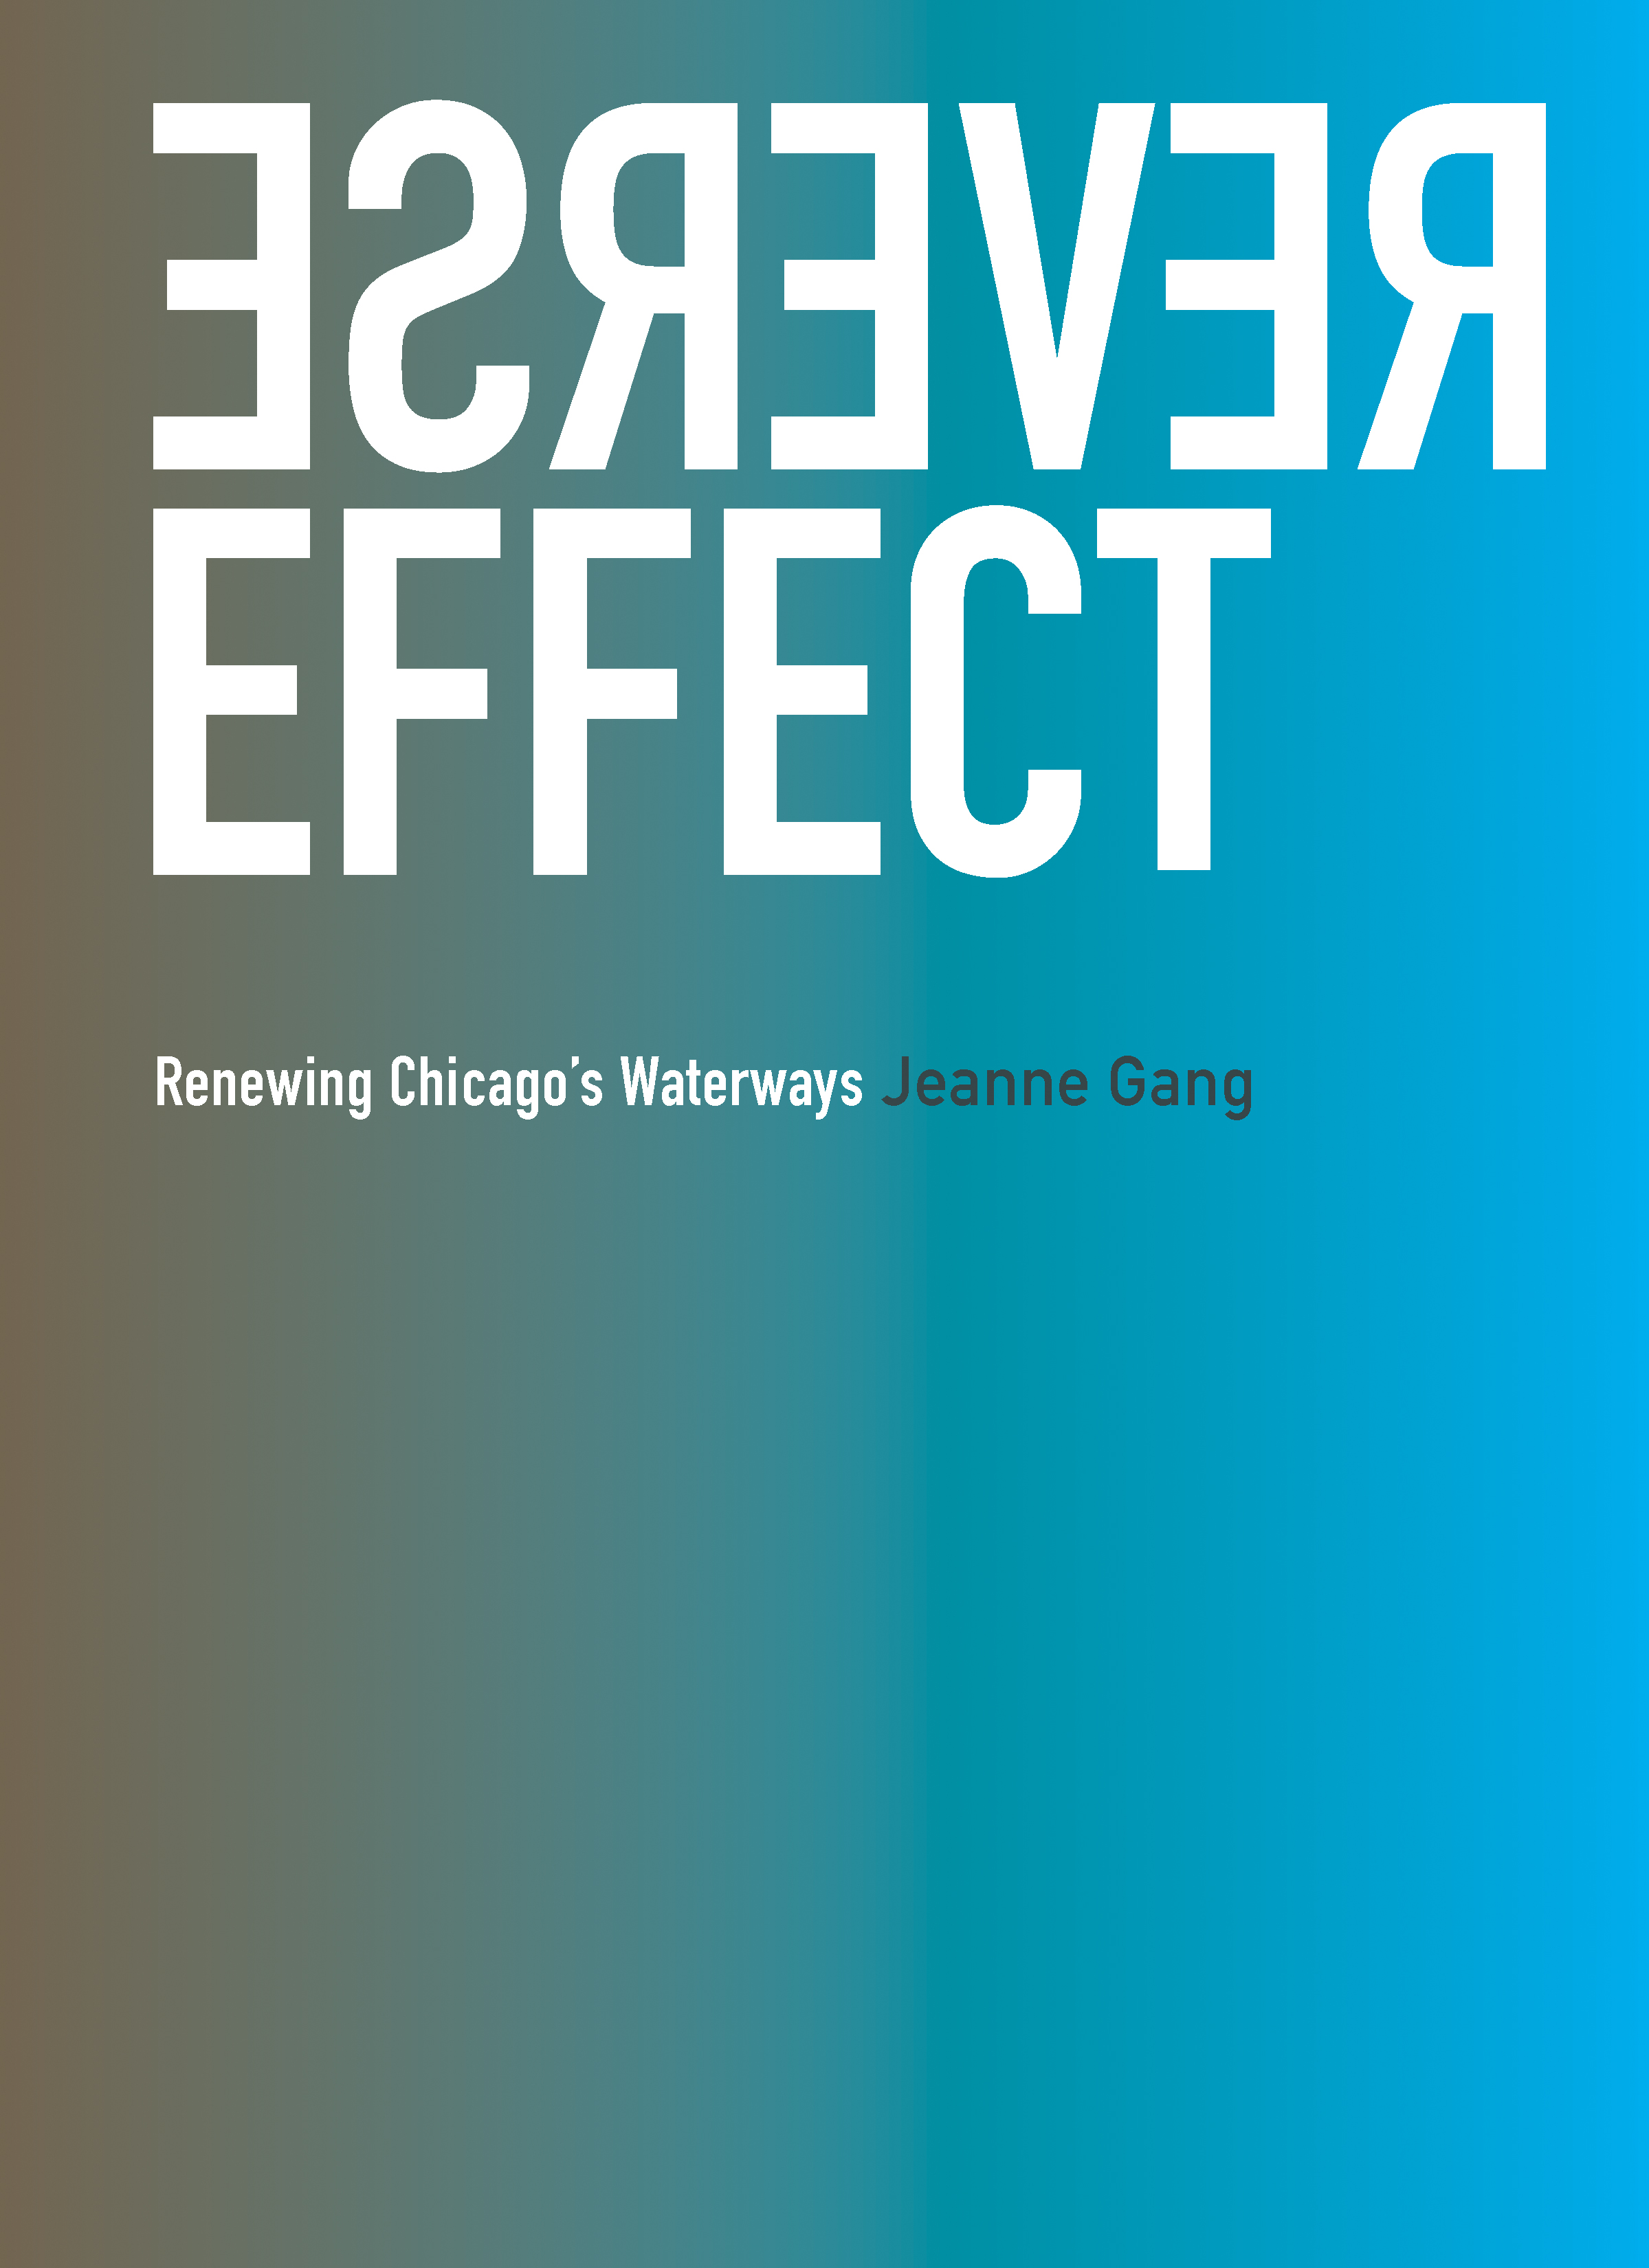 Reverse effect. Реверс эффект. Jeanne gang. Books Chicago. Jeanne gang Architect.